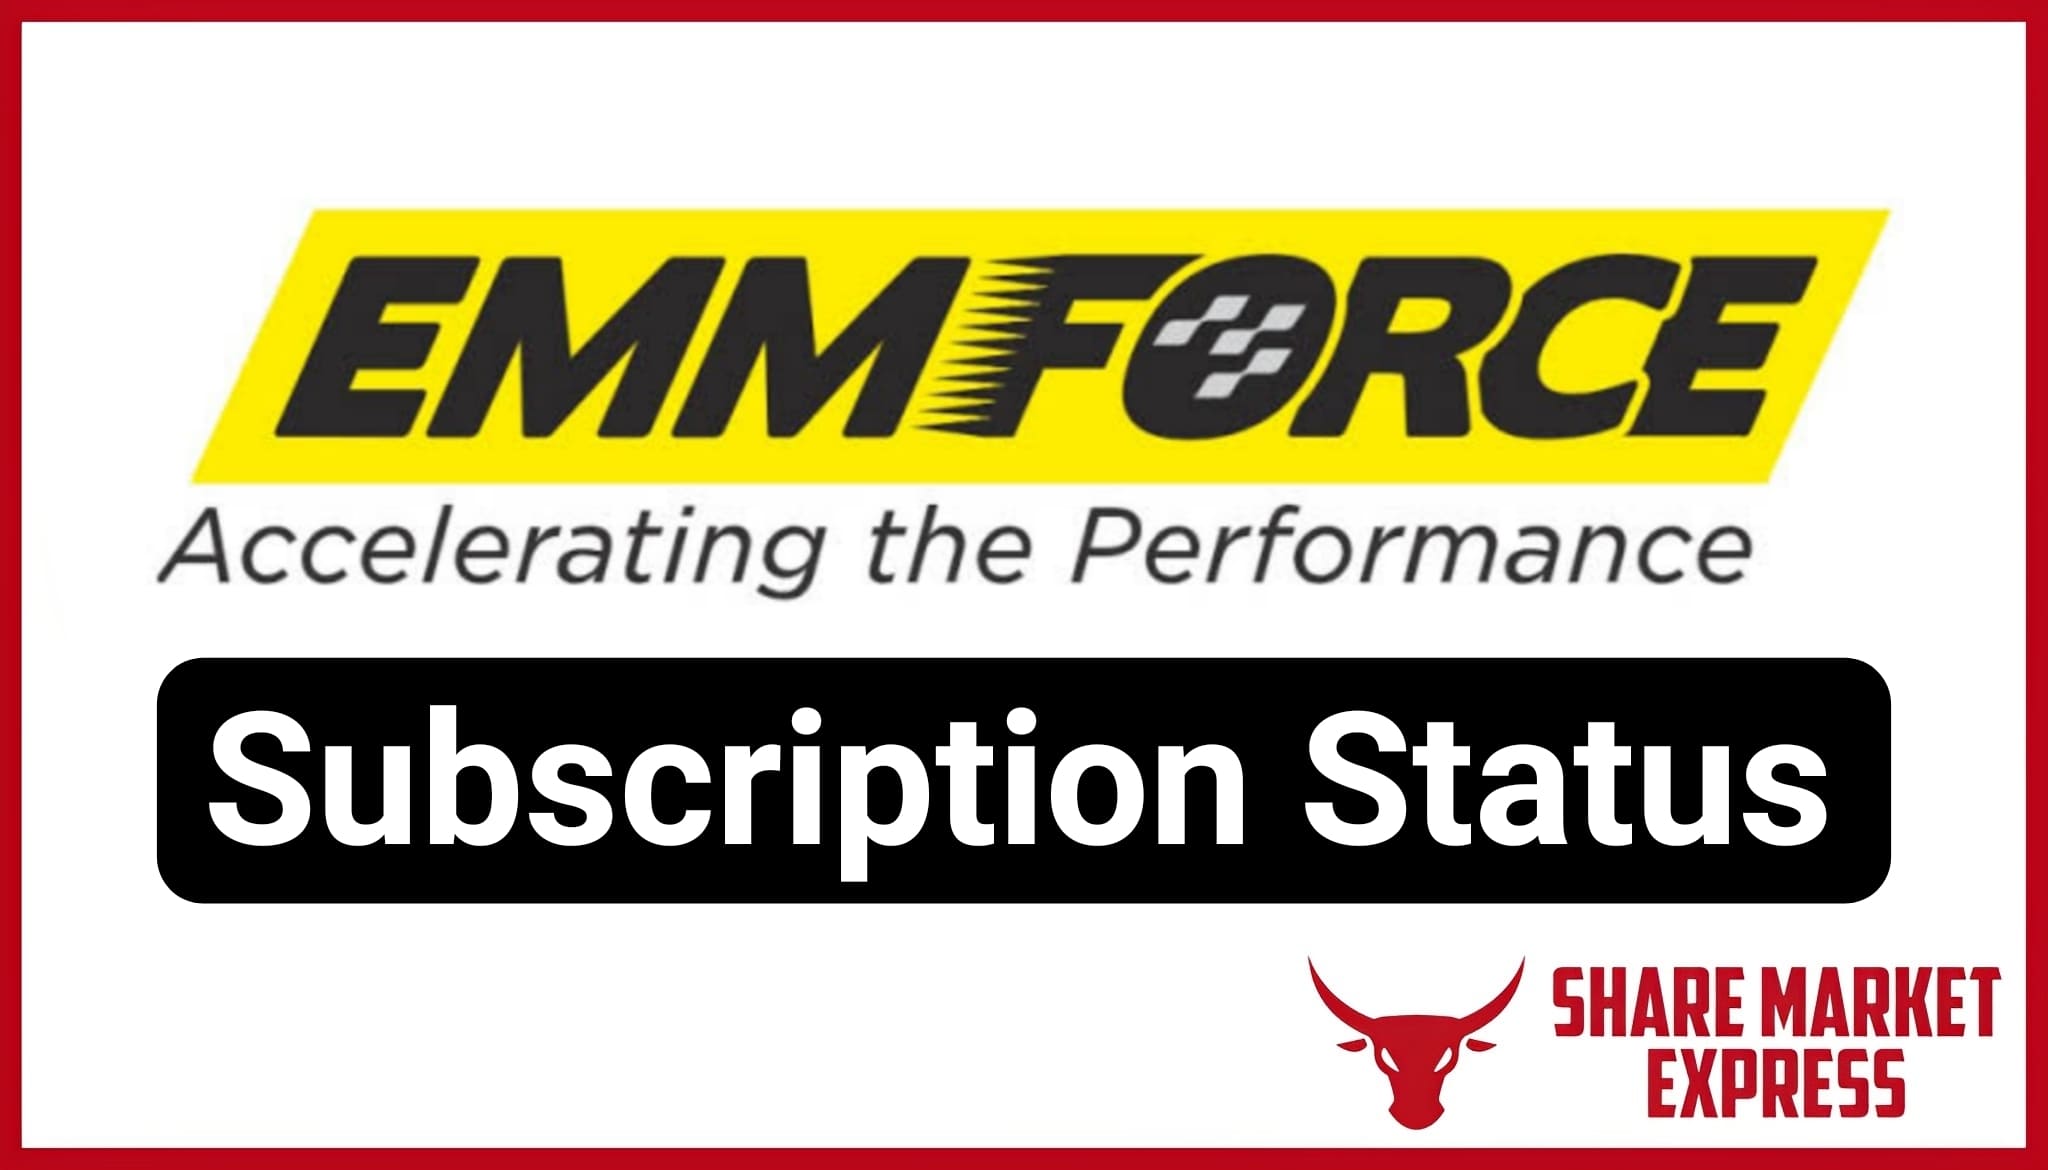 Emmforce Autotech IPO Subscription Status